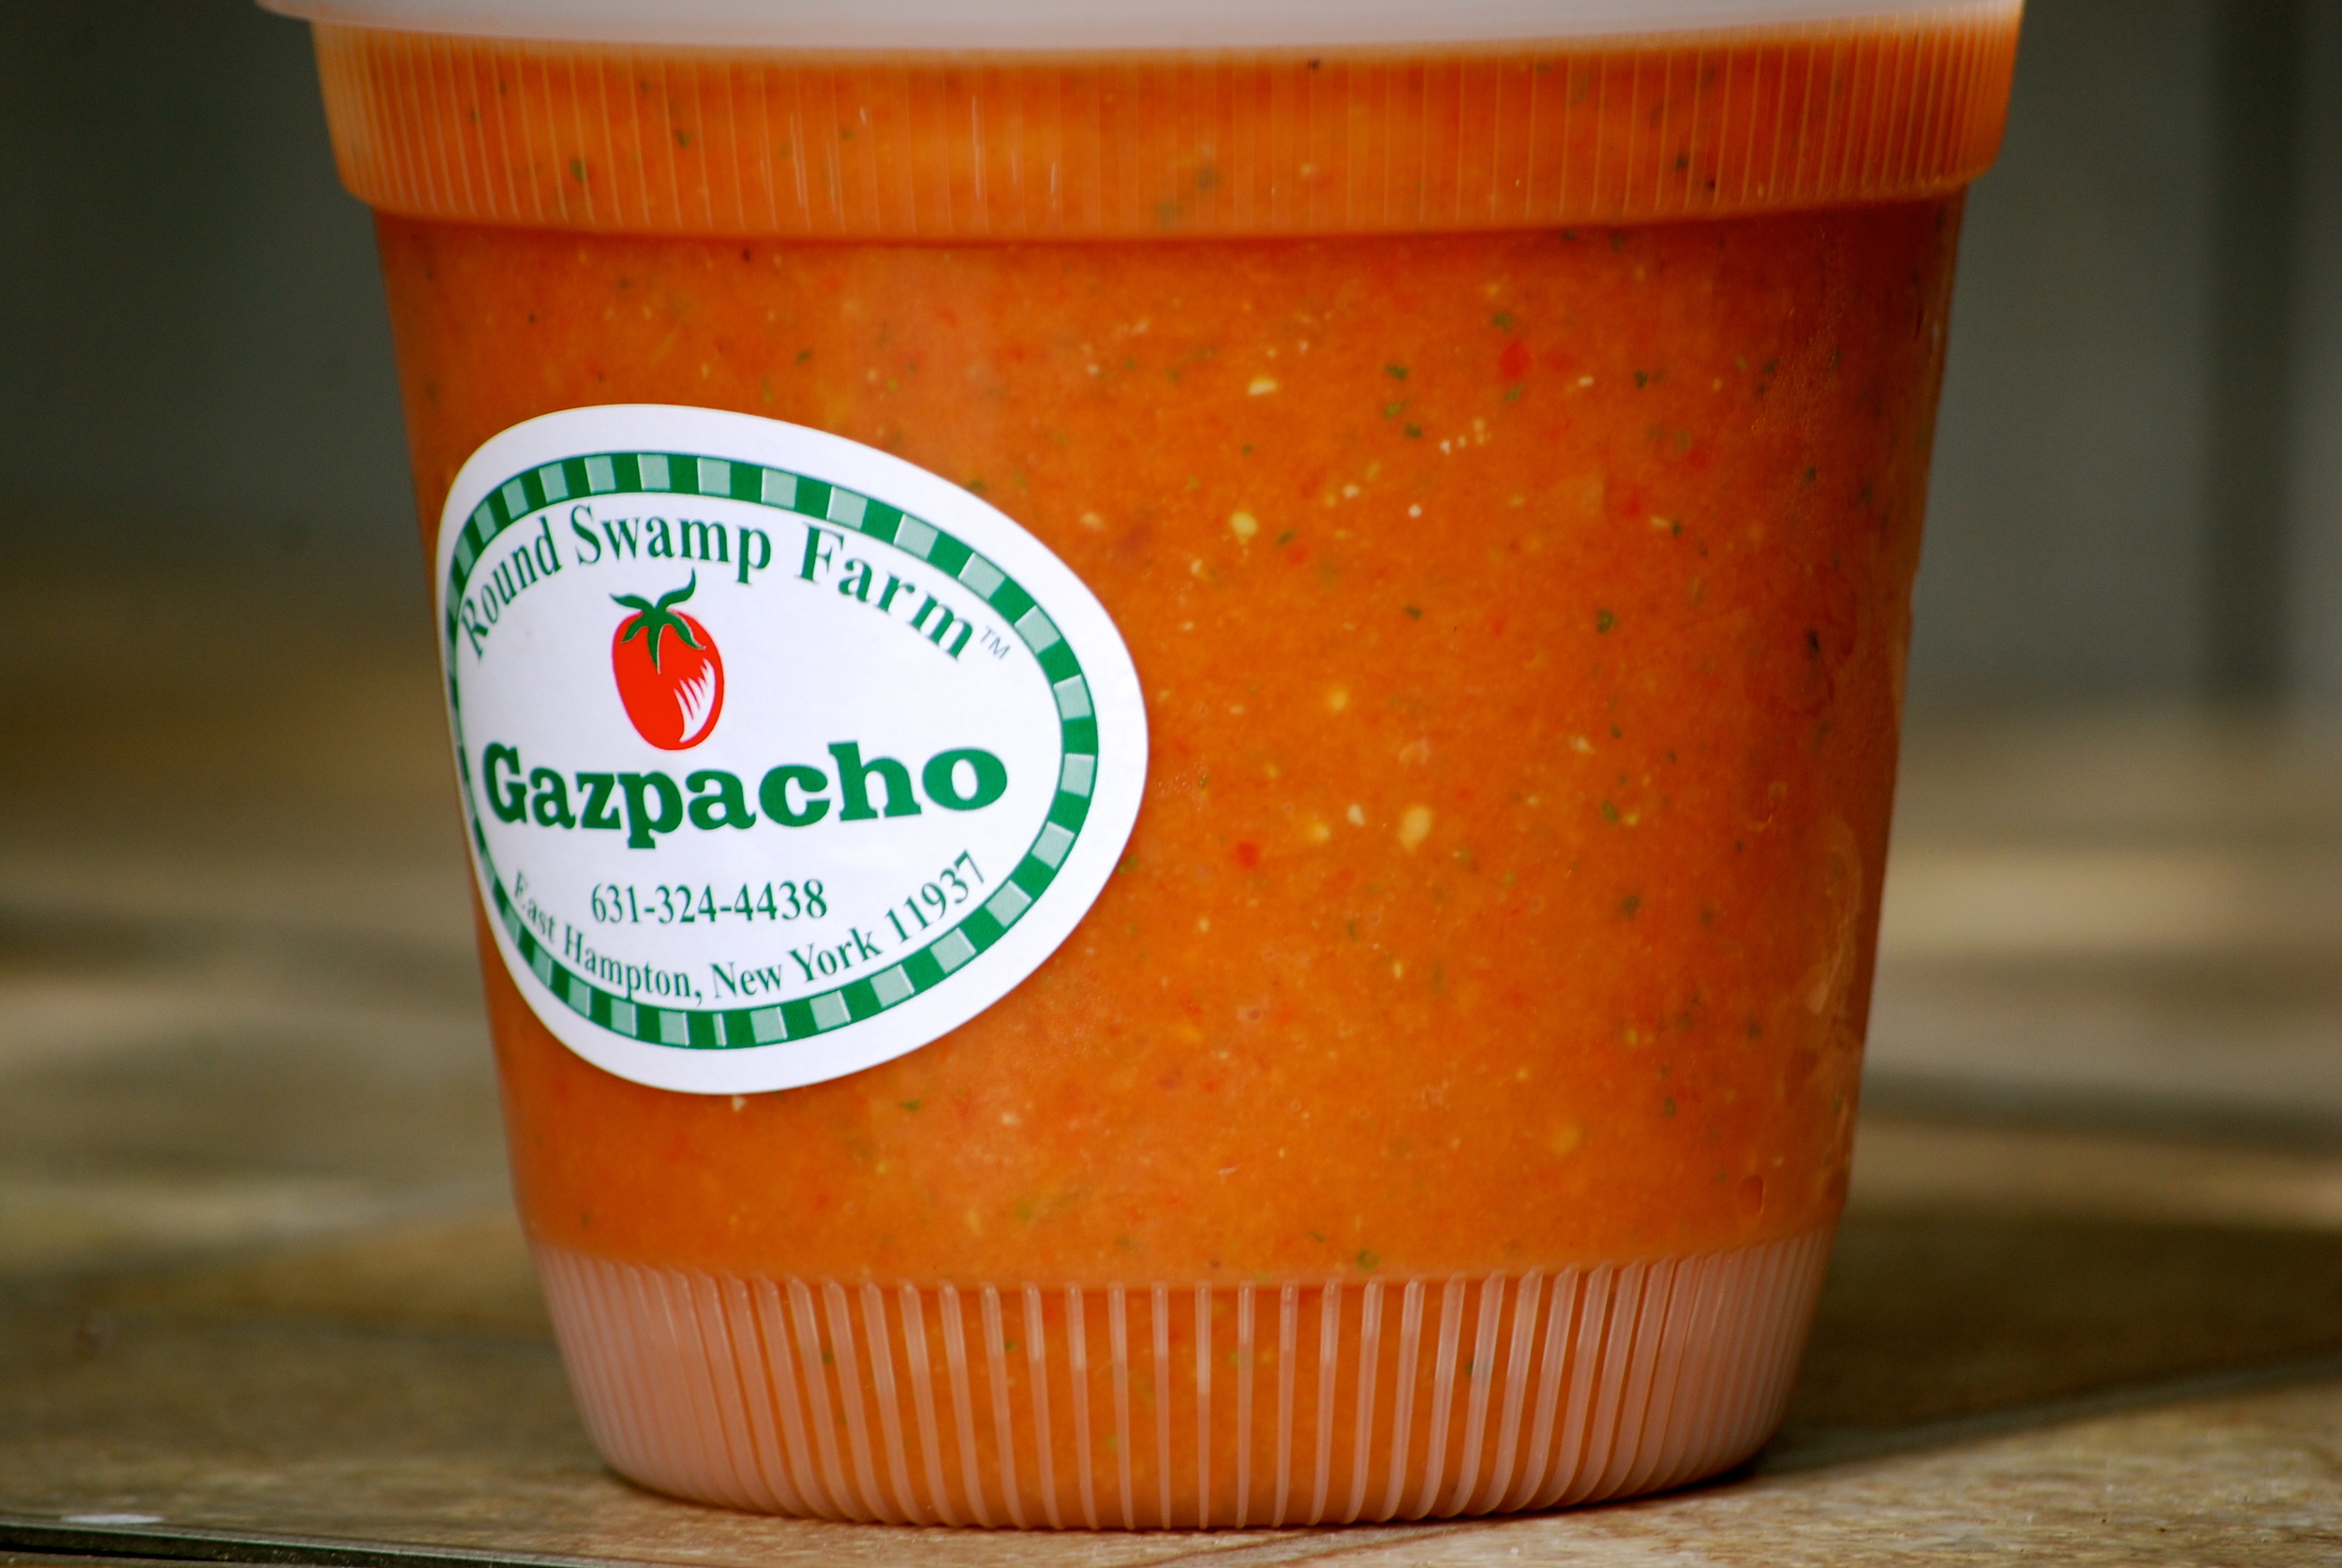 Fresh Gazpacho